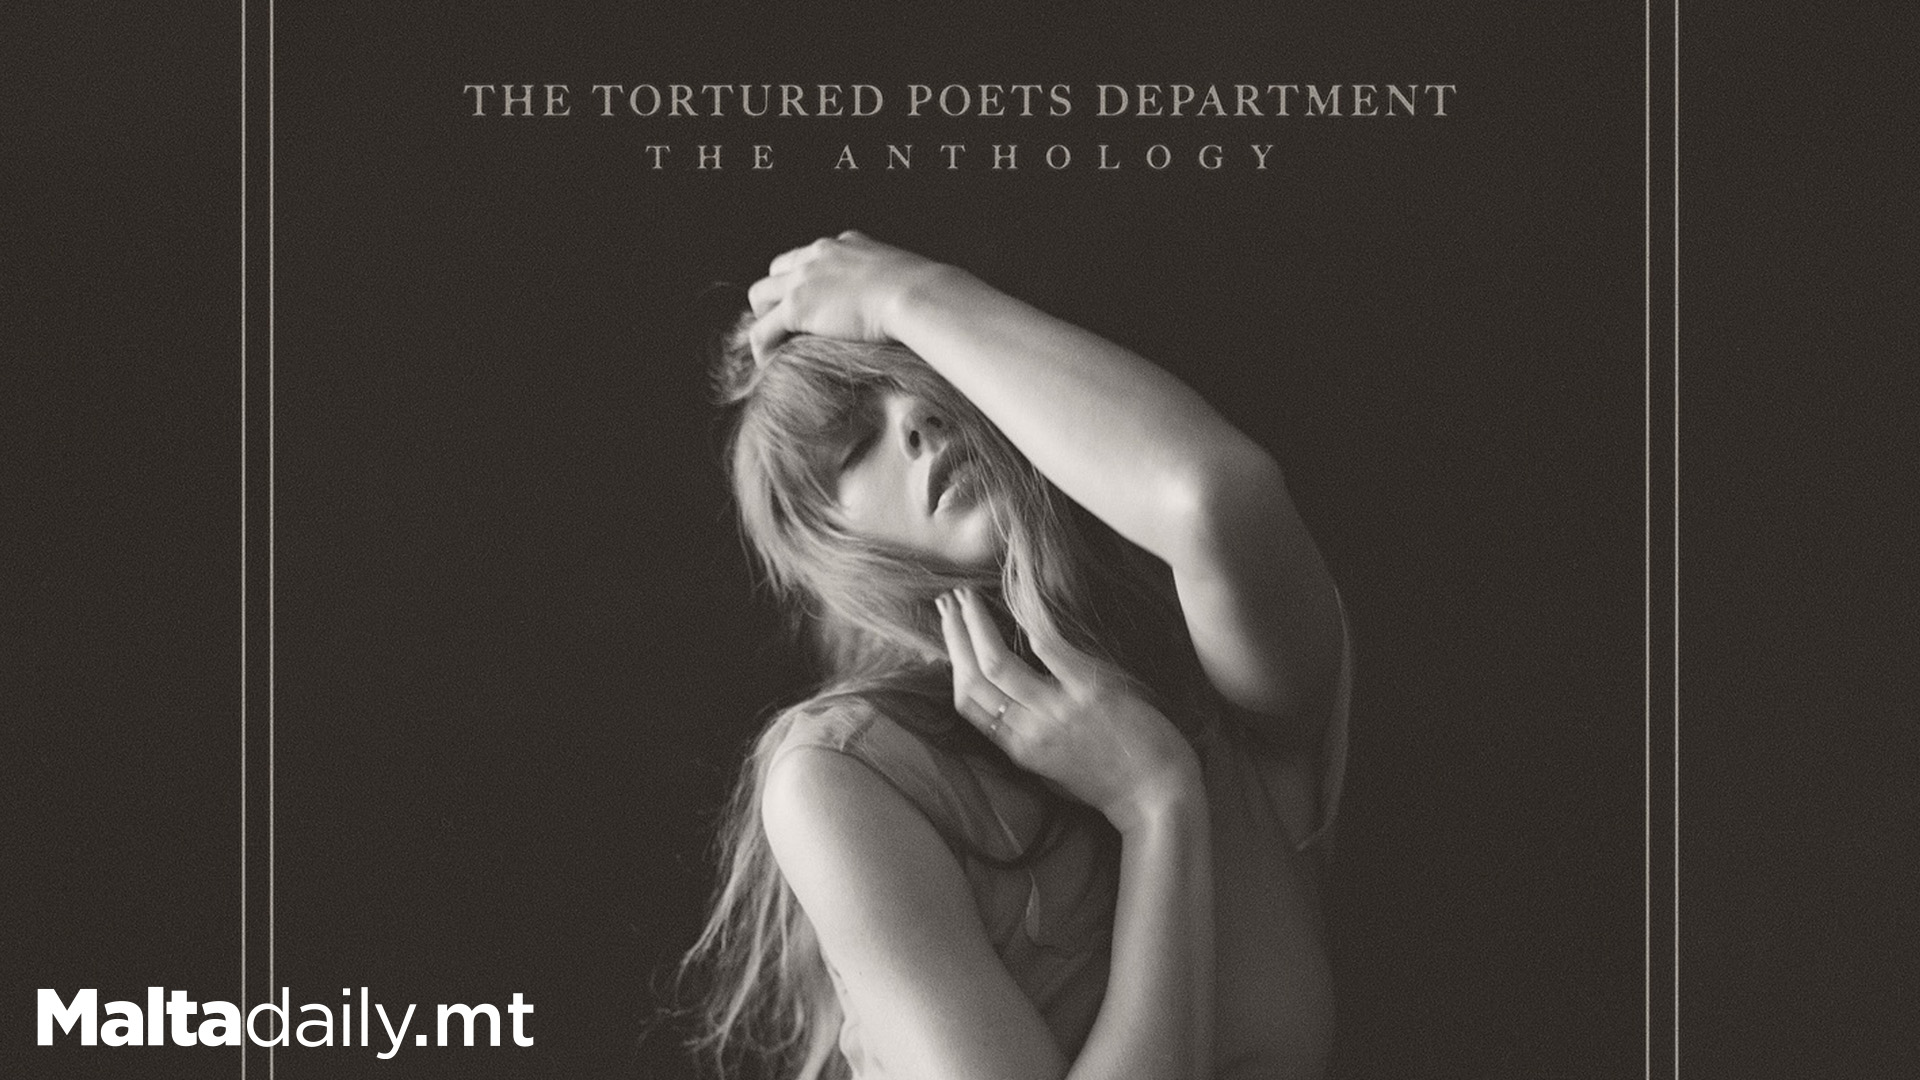 Taylor Swift Releases Surprise Double Album Tortured Poets Department